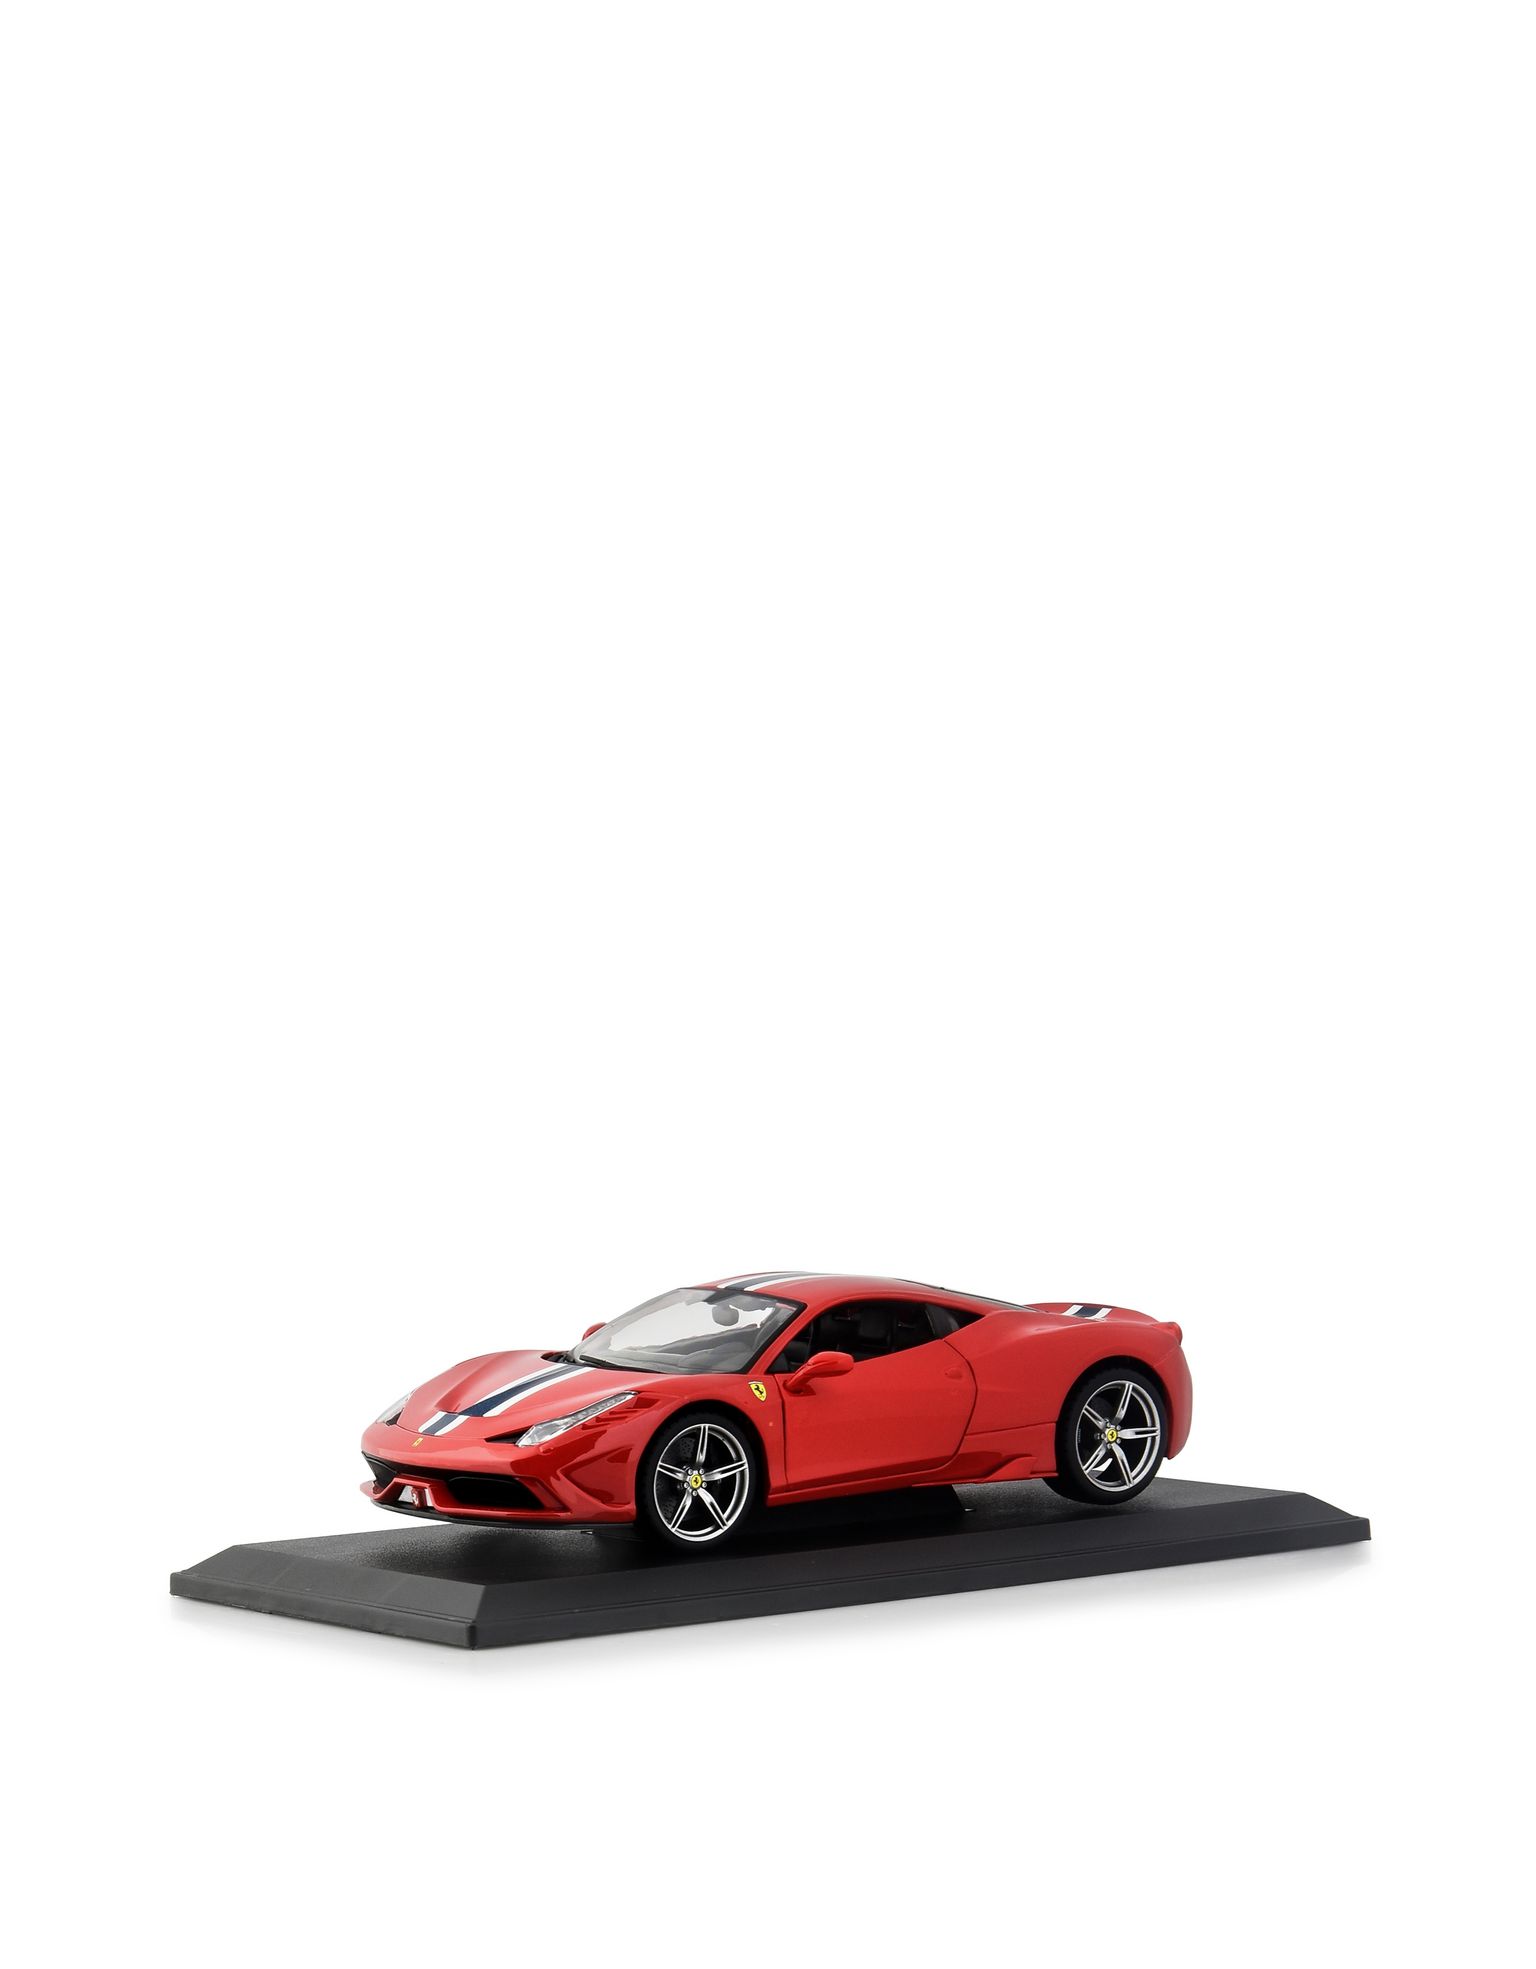 Miniatura Ferrari 458 Speciale a escala 1:18 Ferrari Unisex | Scuderia Ferrari Store Oficial Online